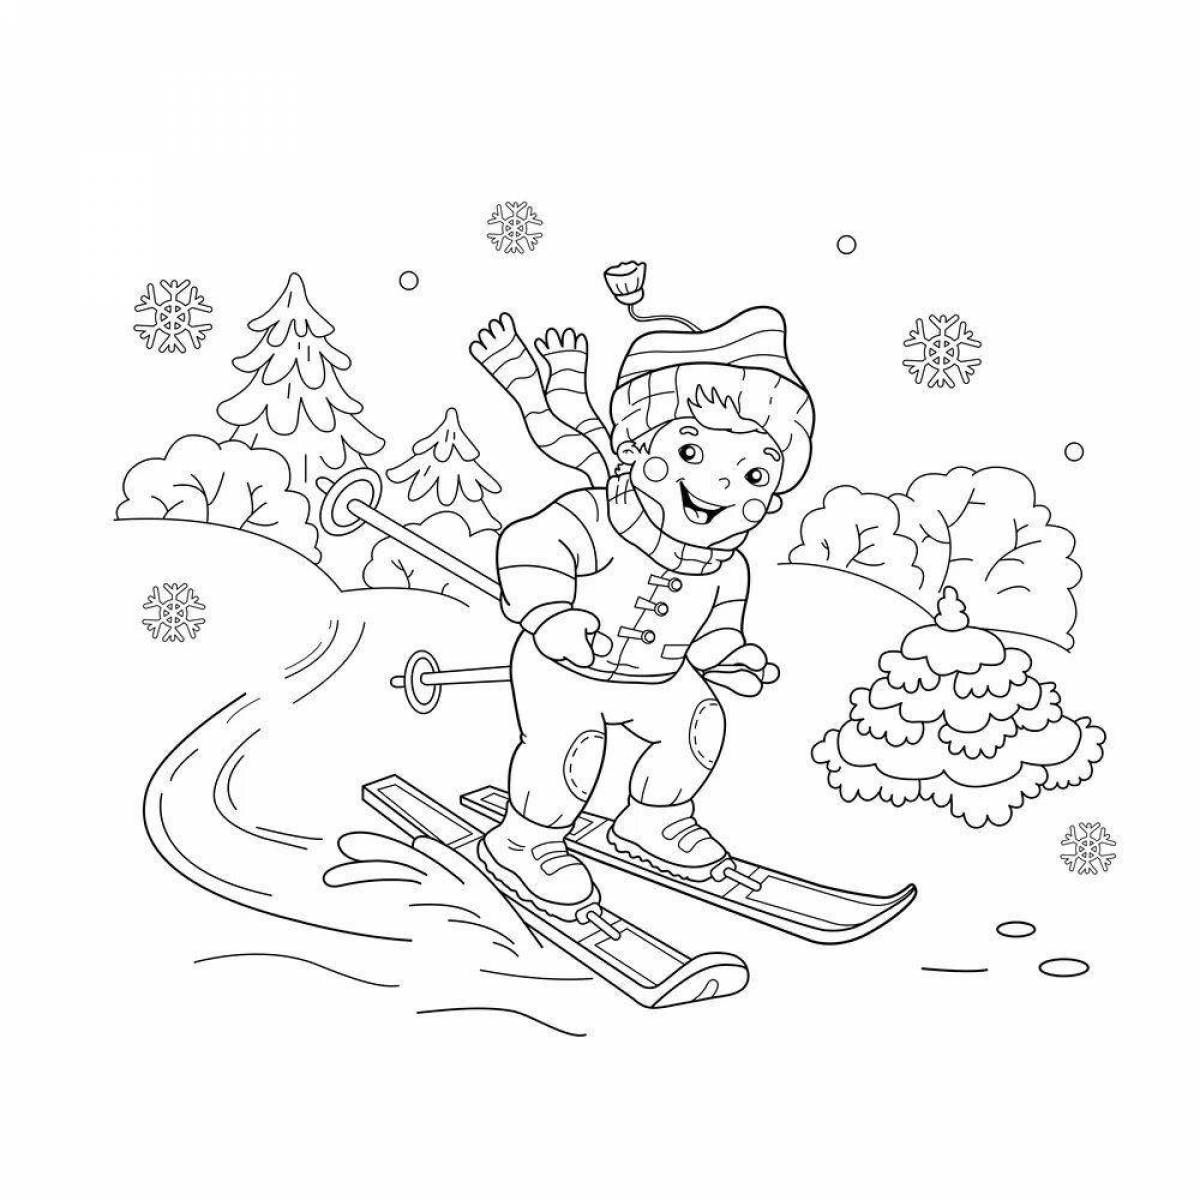 Imaginative senior skier coloring page